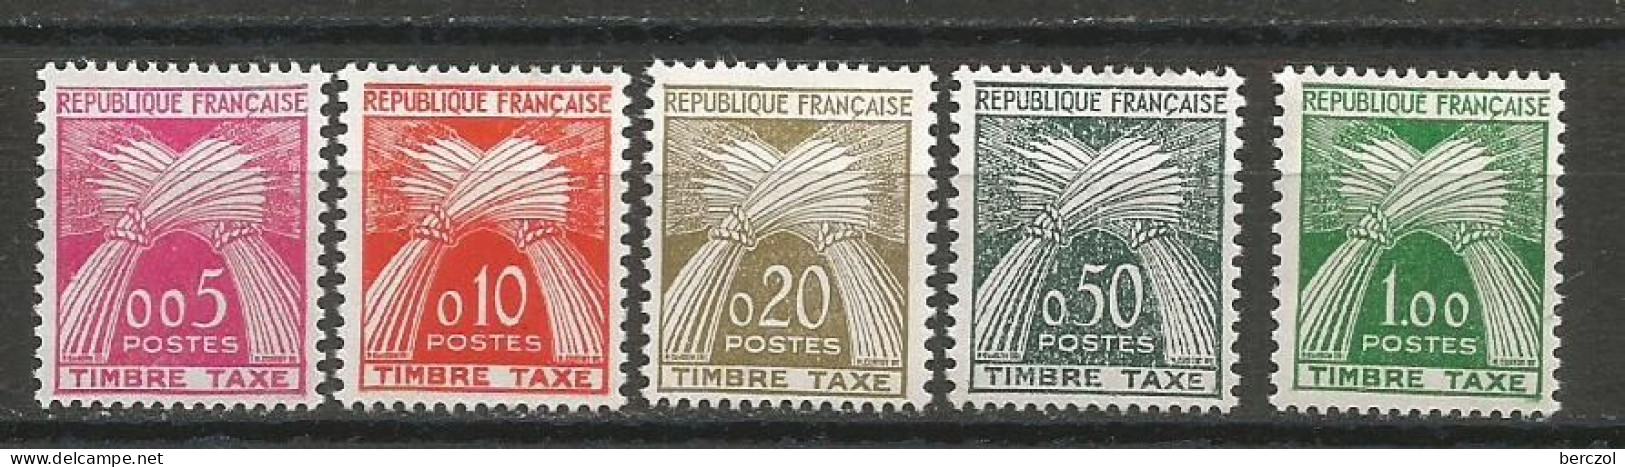 FRANCE ANNEE 1960 TAXE LOT DE 5 TP N°90 à 94 NEUFS ** MNH TB COTE 70,00 €  - 1960-... Ungebraucht